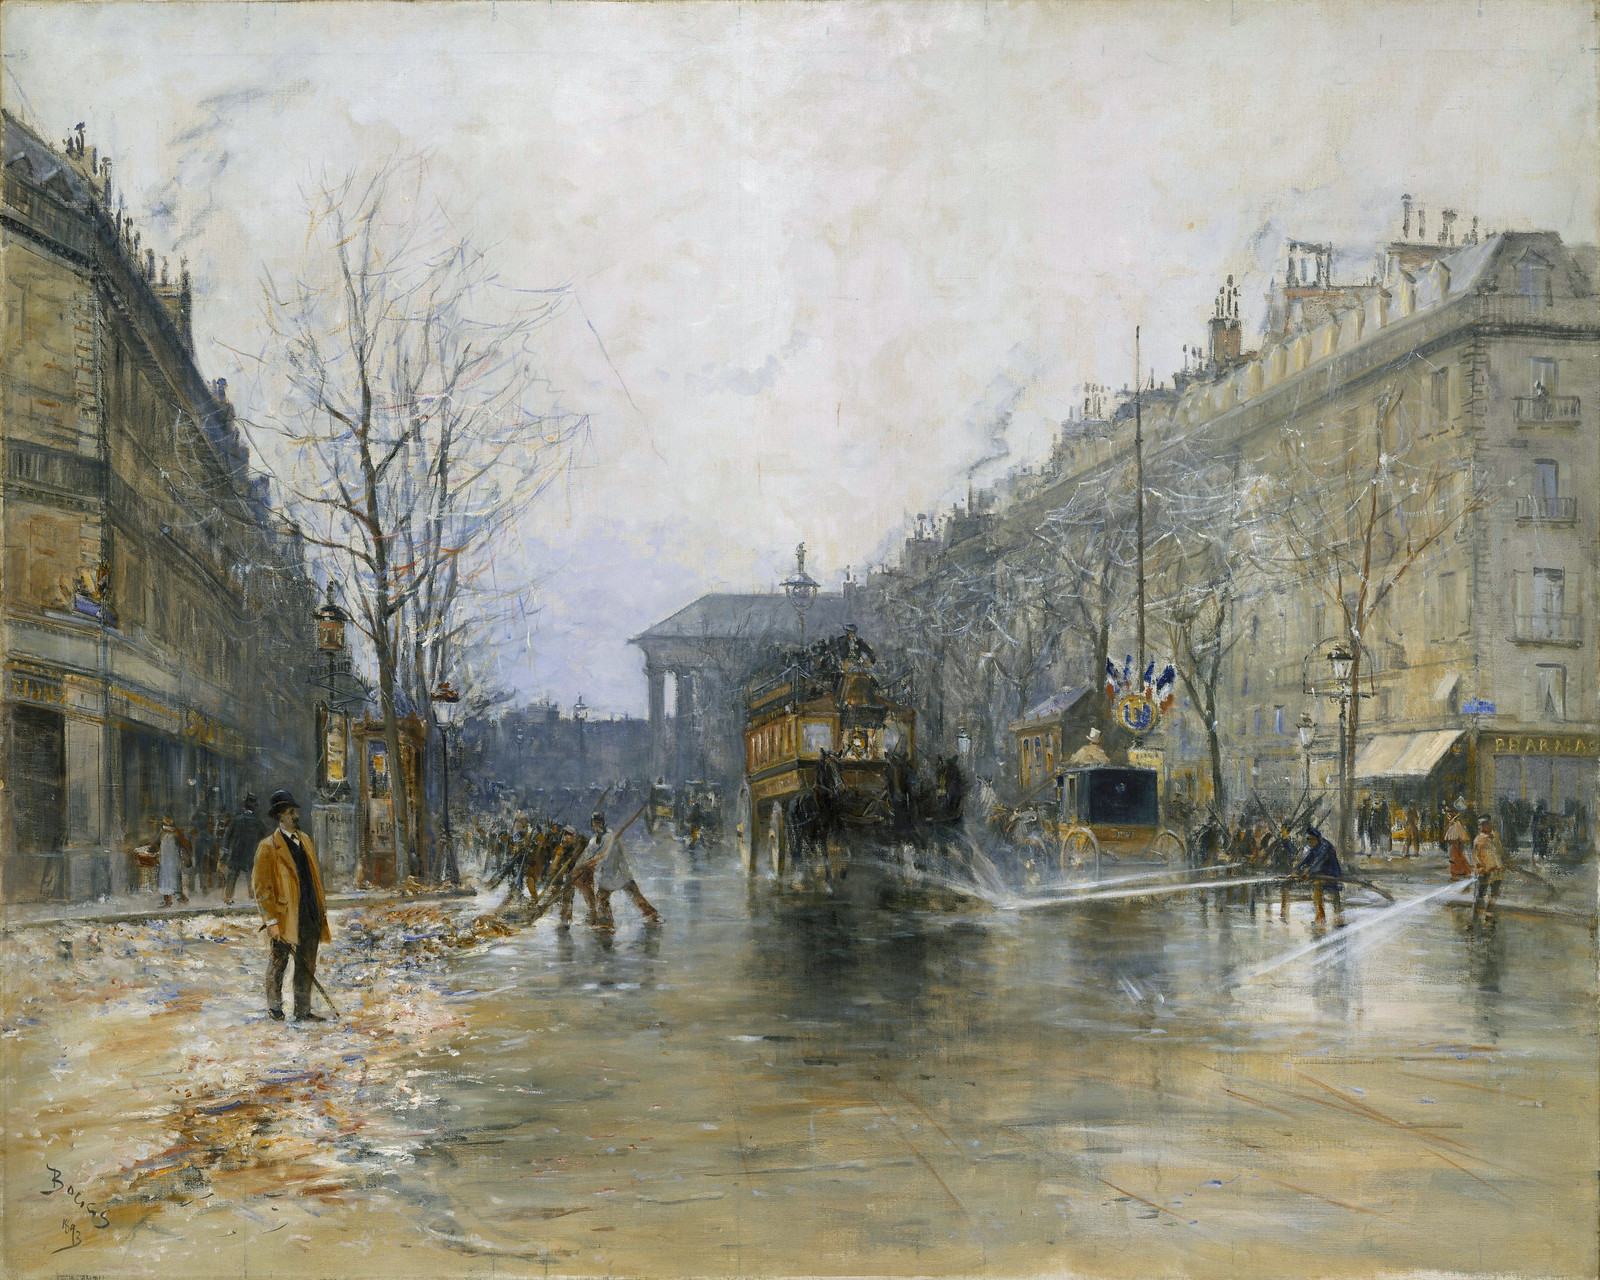 Paris Street Scene by Frank Boggs, 1893